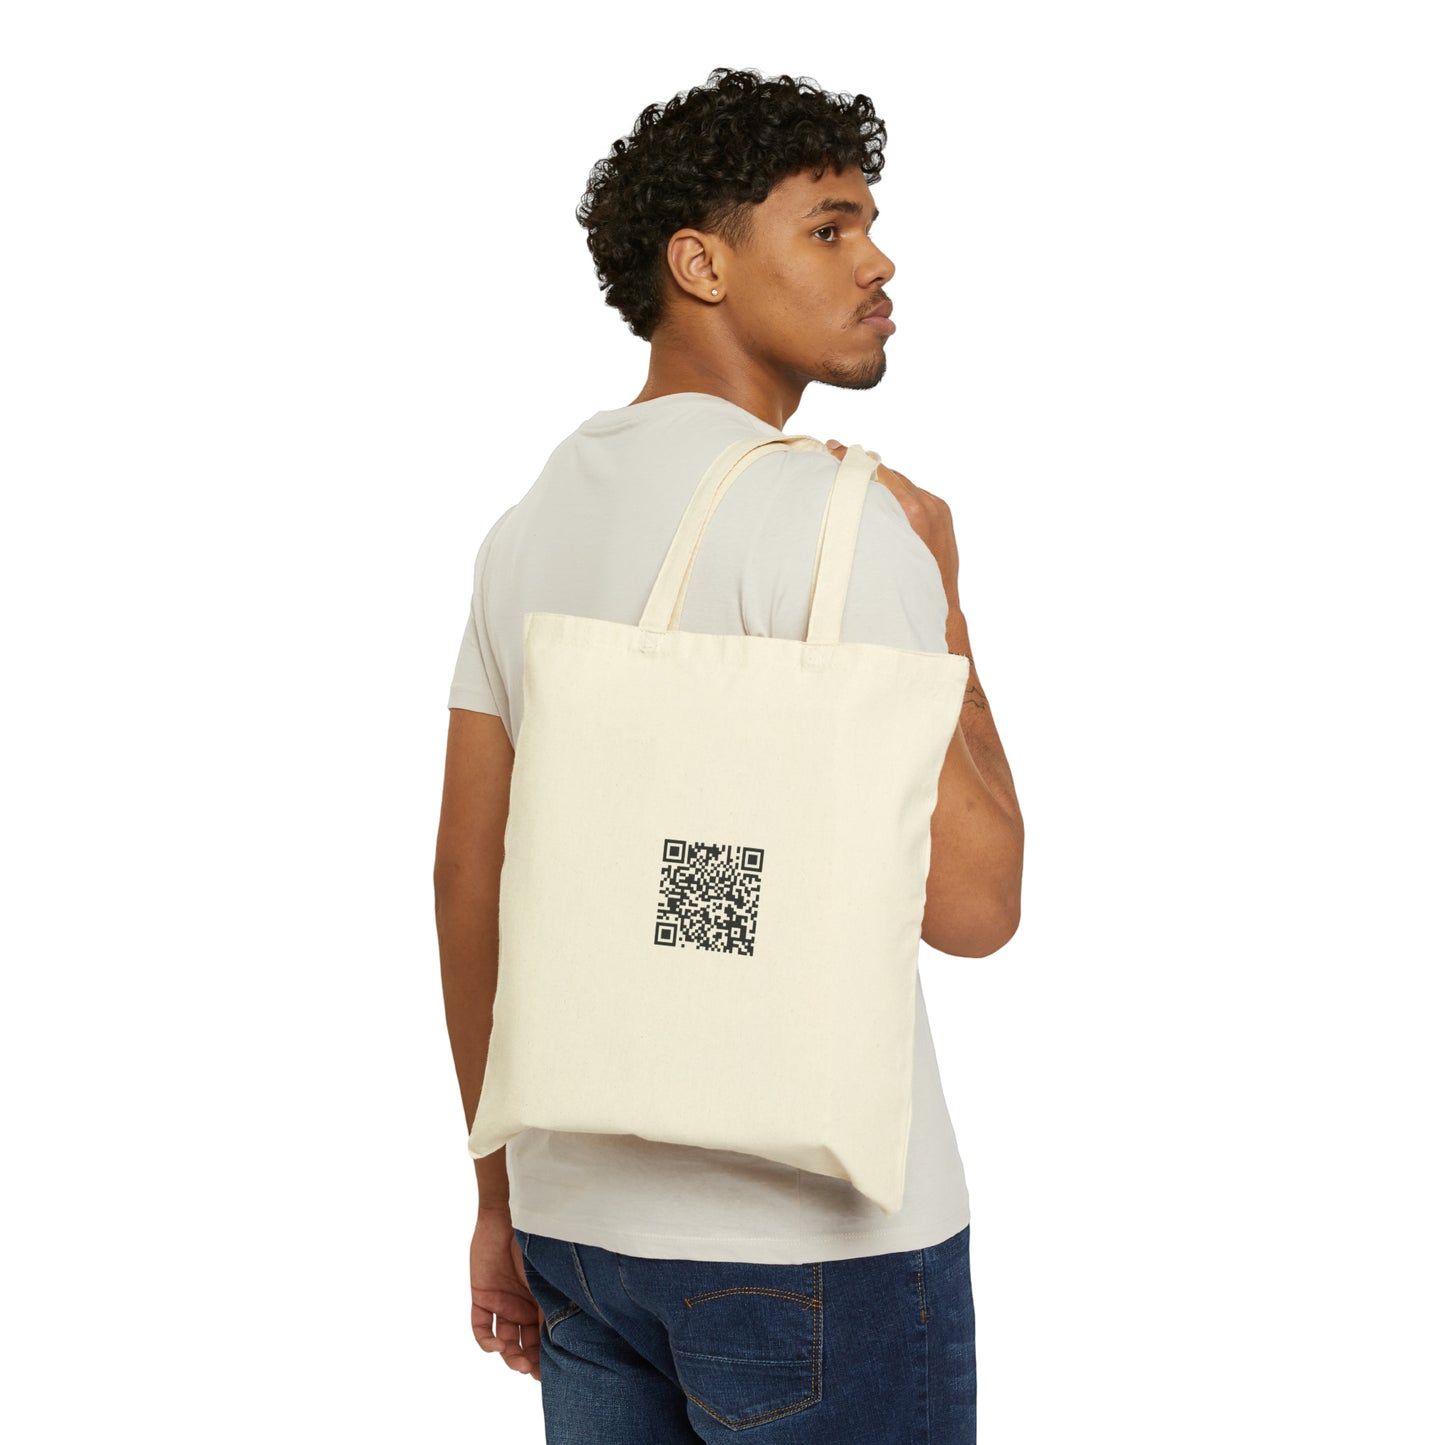 New Age Lamians - Cotton Canvas Tote Bag